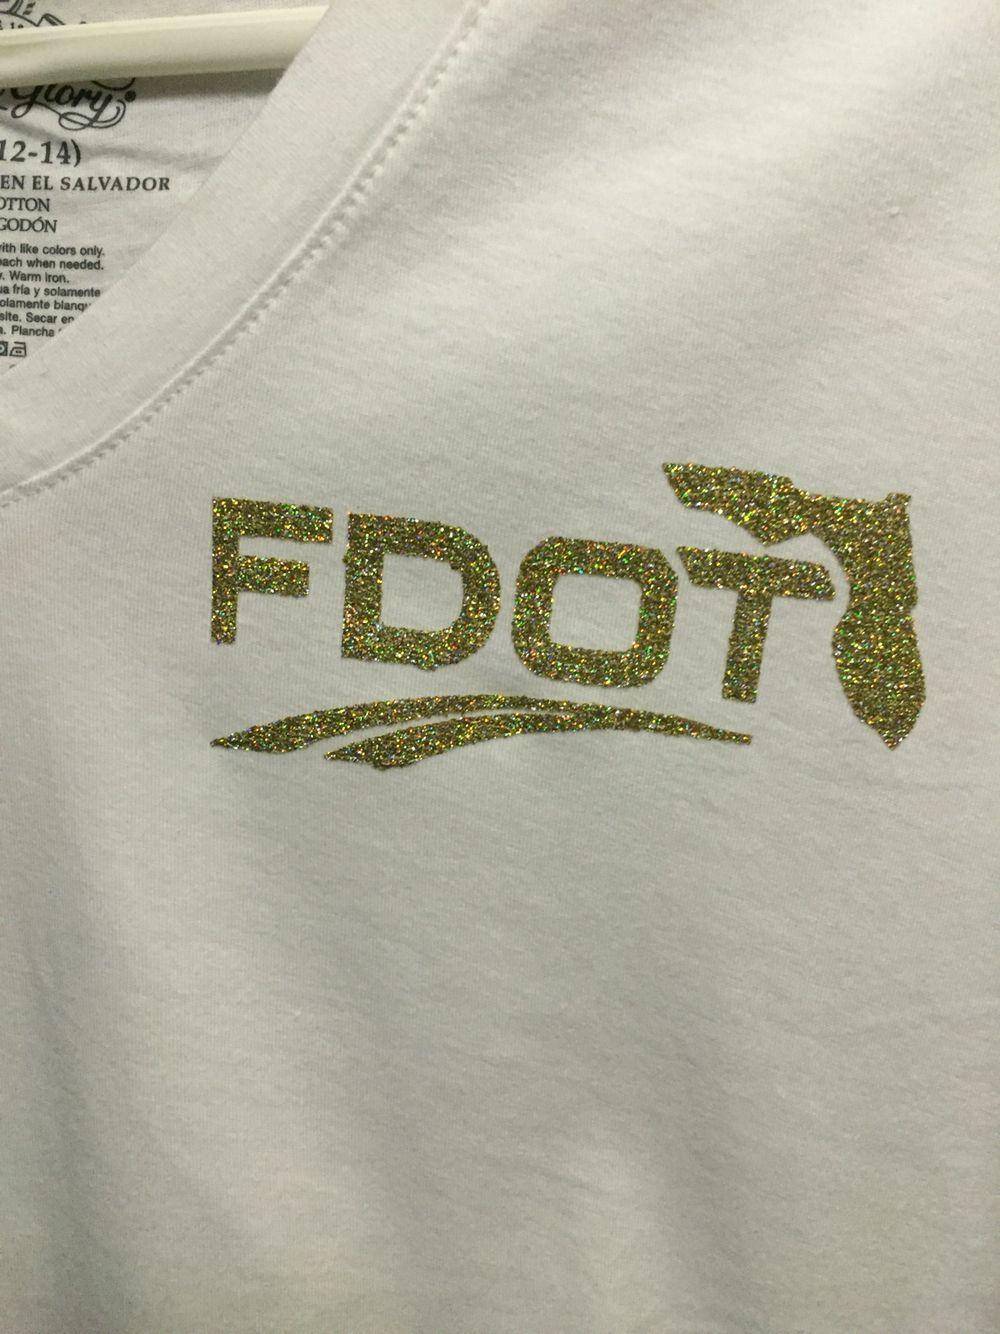 FDOT Logo - My Cricut Florida Department of Transportation (FDOT) Logo shirt